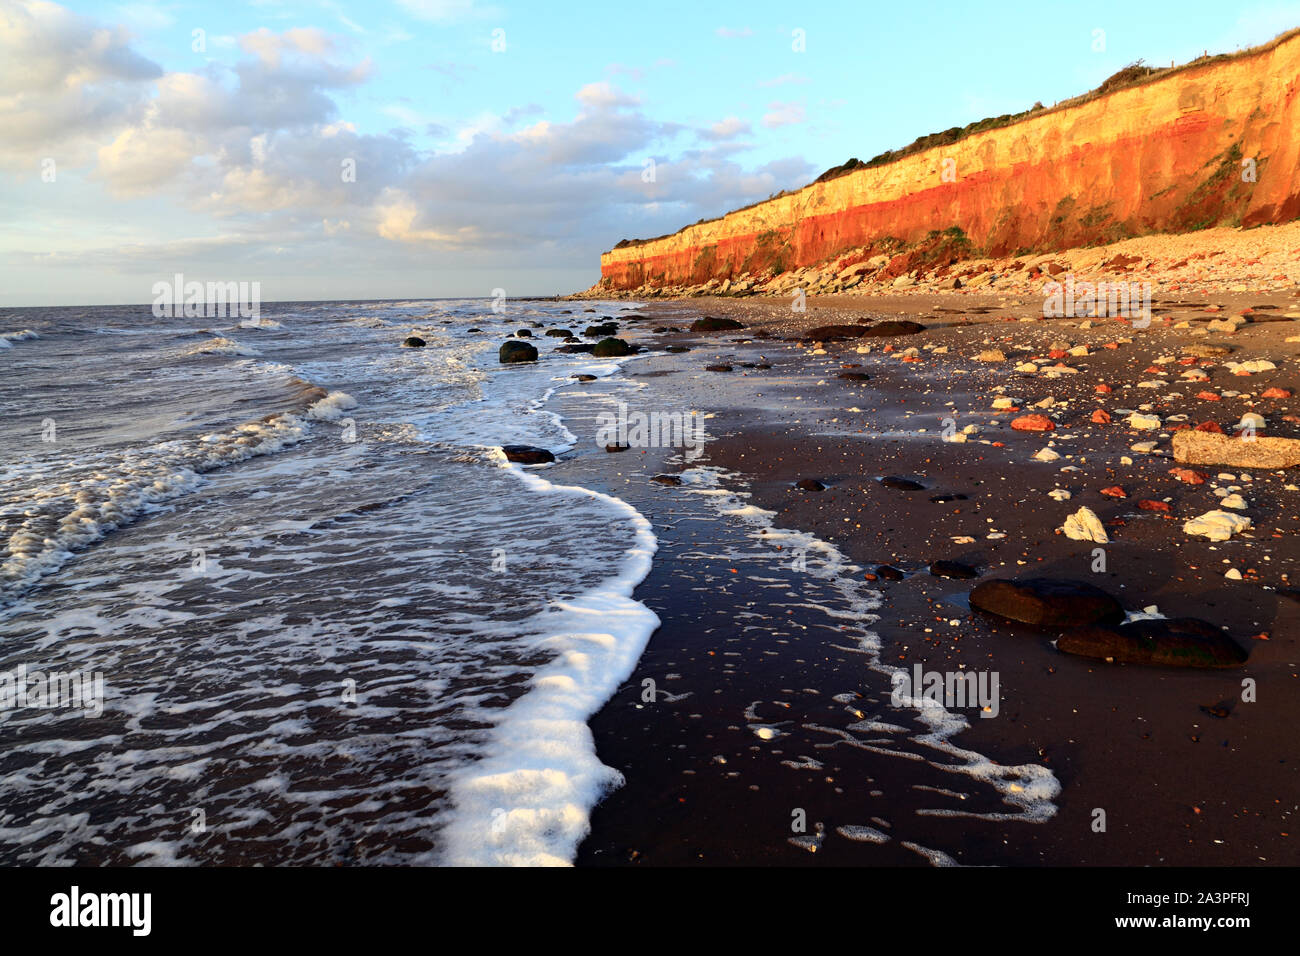 Old Hunstanton, striped cliffs, beach, The Wash, North Sea, Norfolk, England. Stock Photo